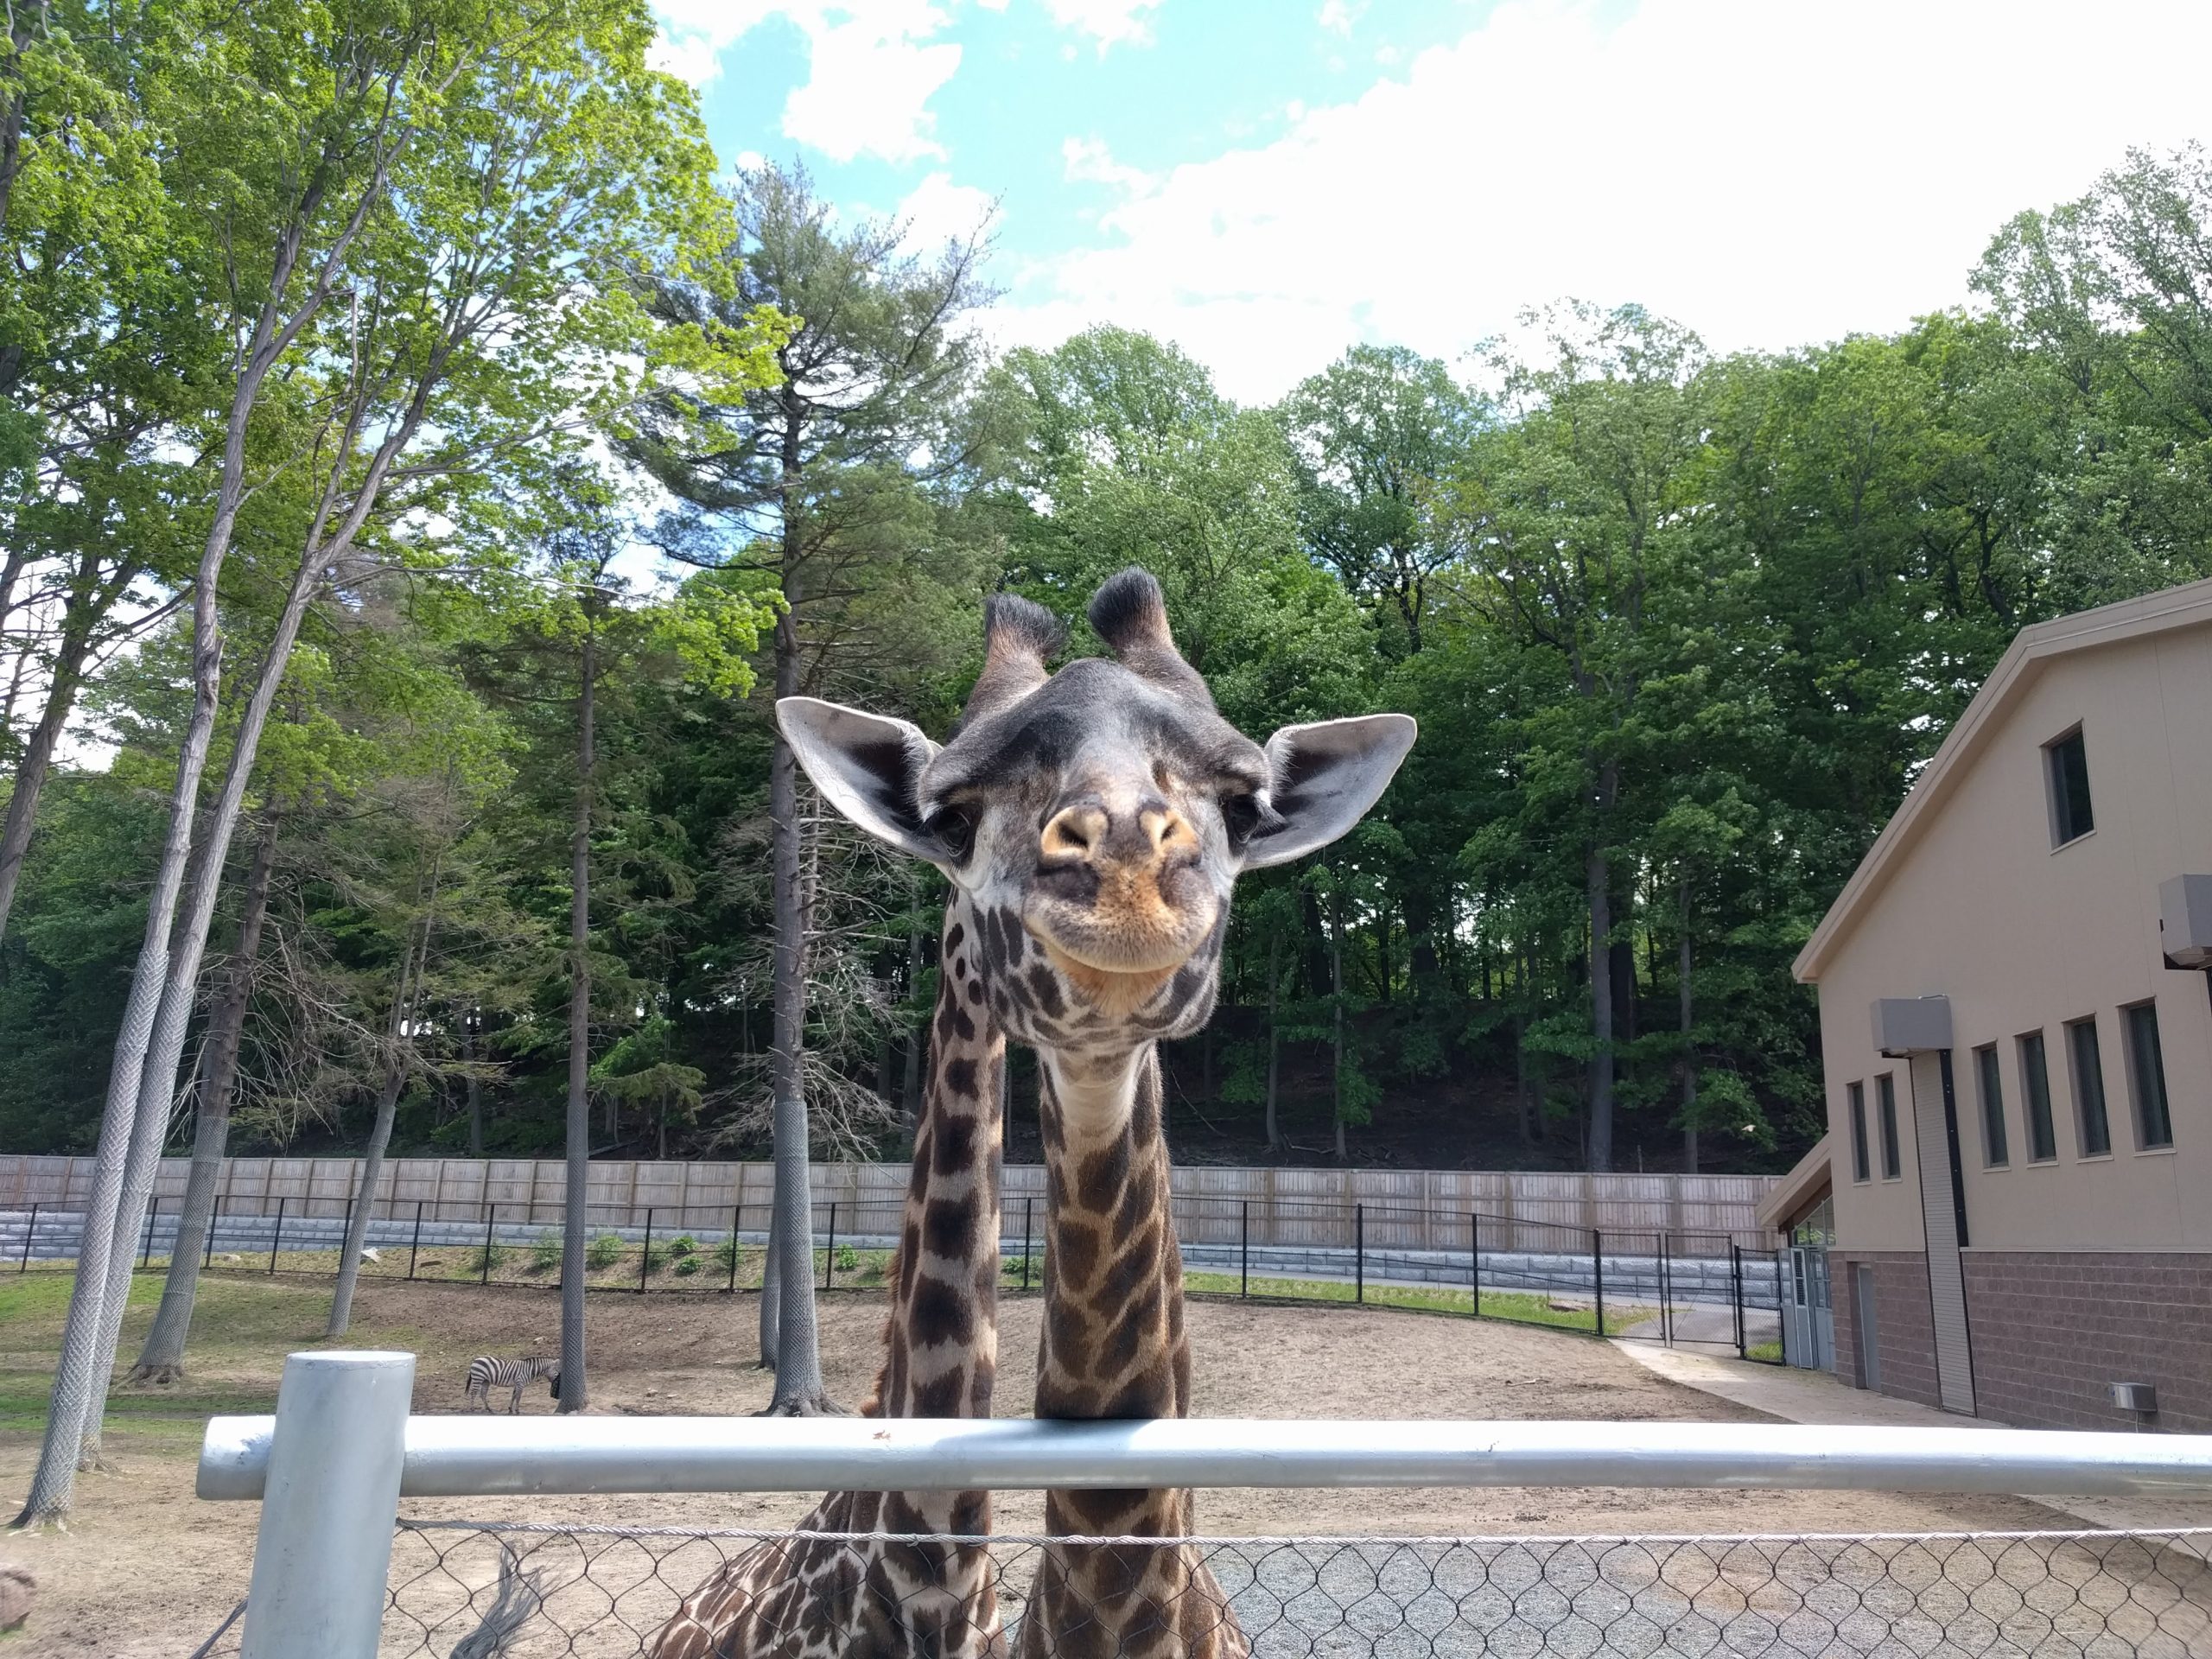 World Giraffe Day 2021: How the Zoo Supports Giraffe Conservation